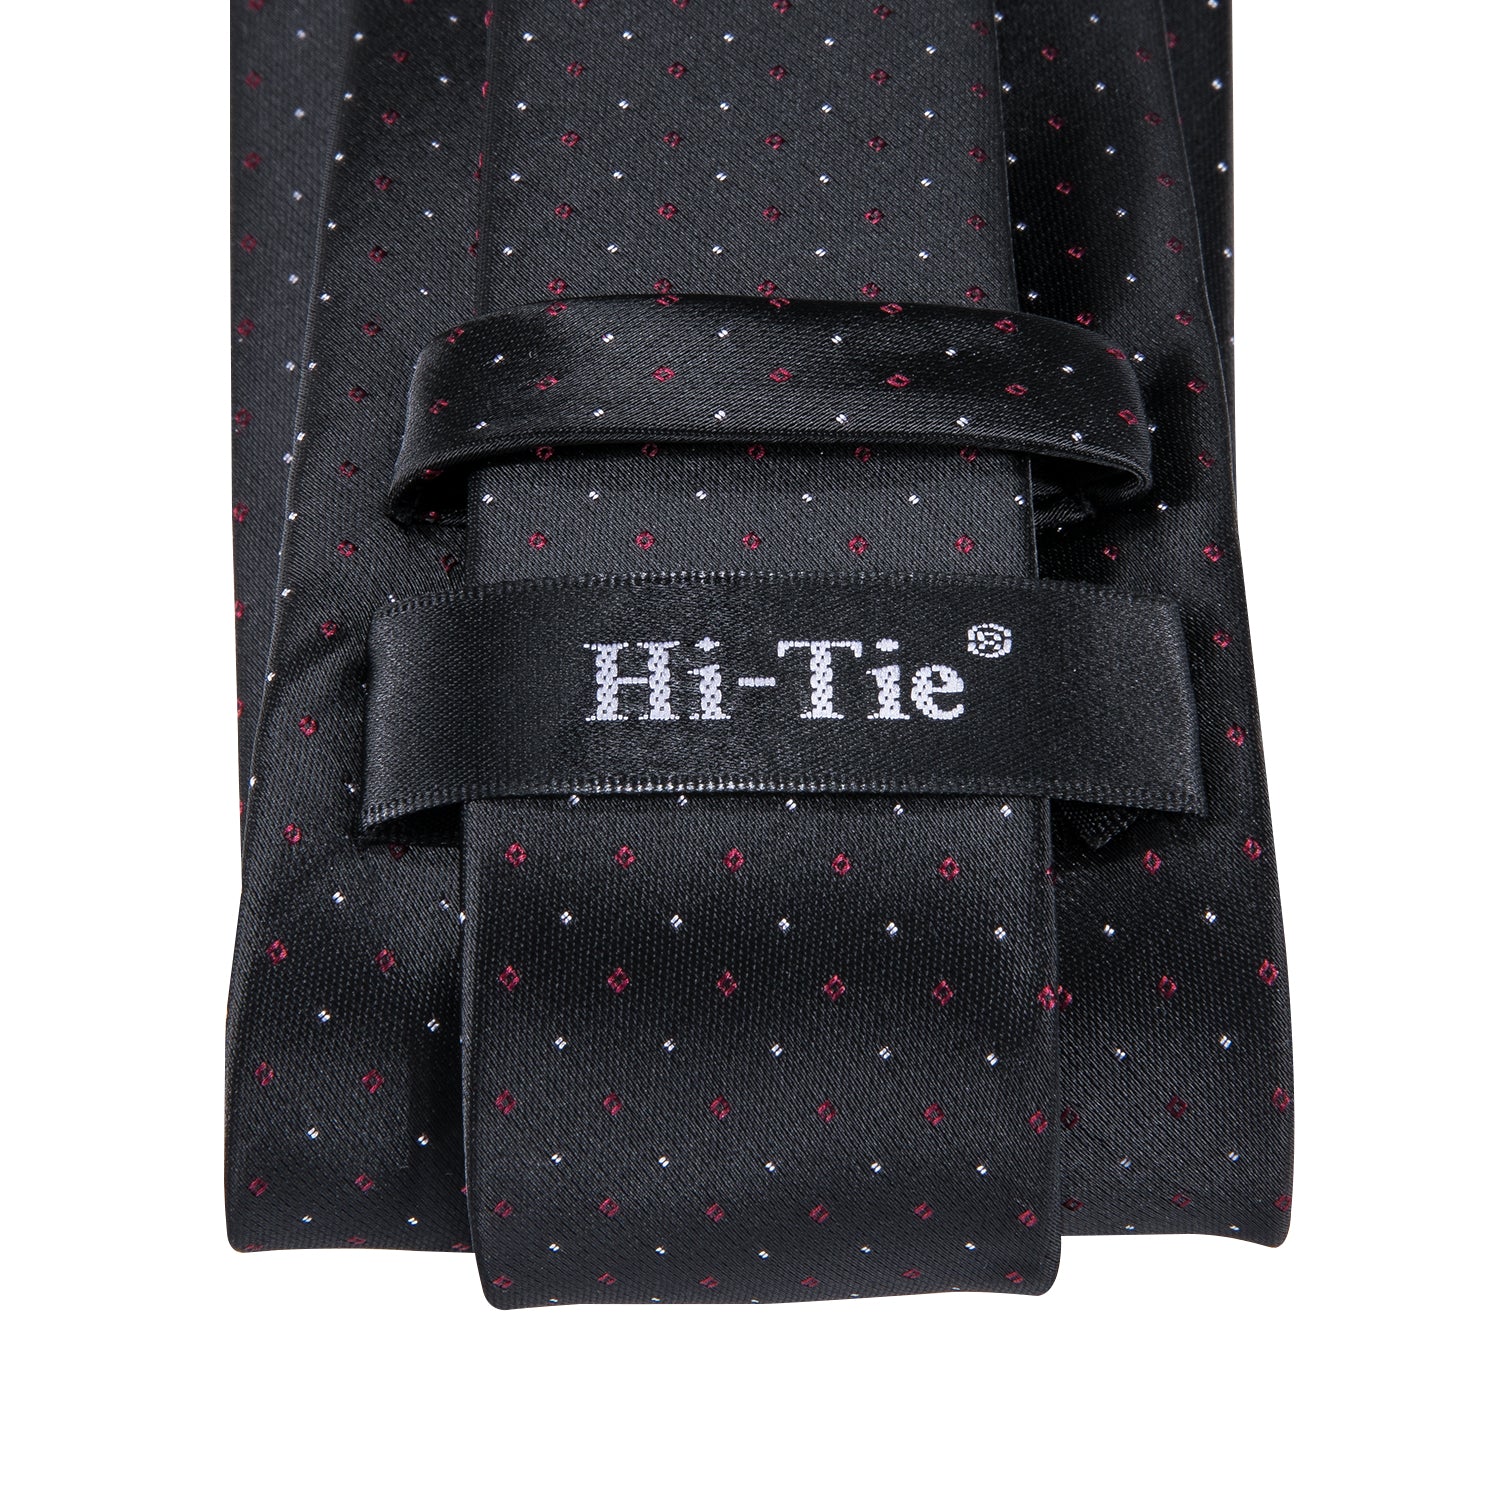 Black Red Polka Dot Men's Tie Pocket Square Cufflinks Set